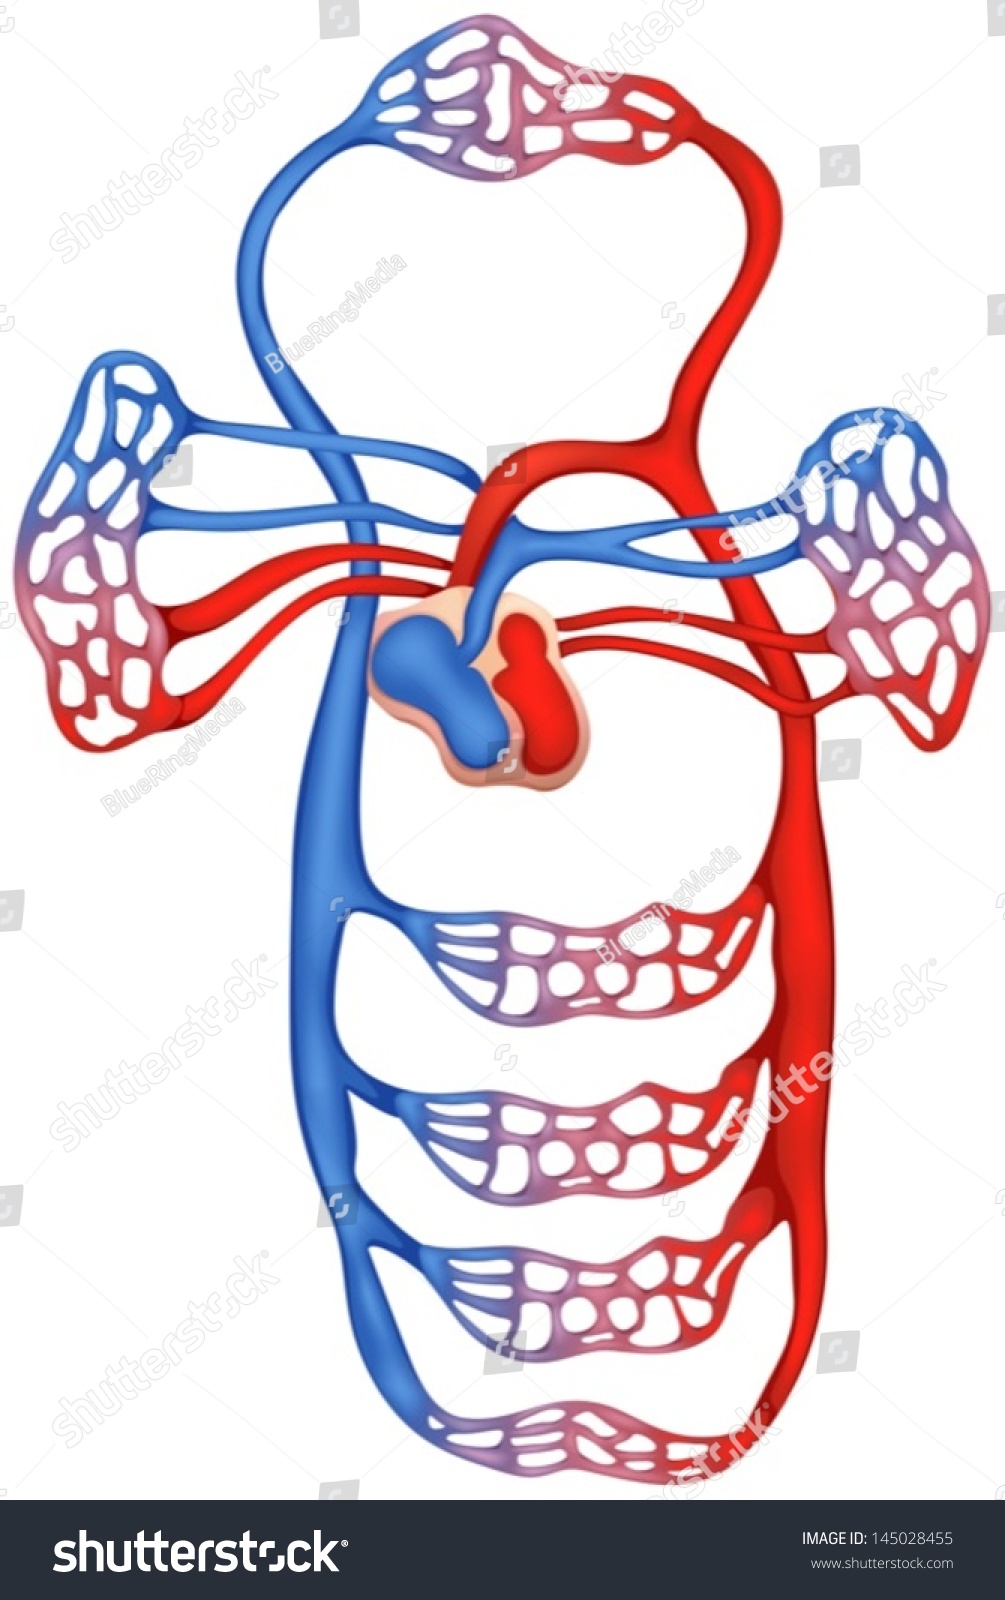 Illustration Showing Circulatory System Stock Vector 145028455 ...